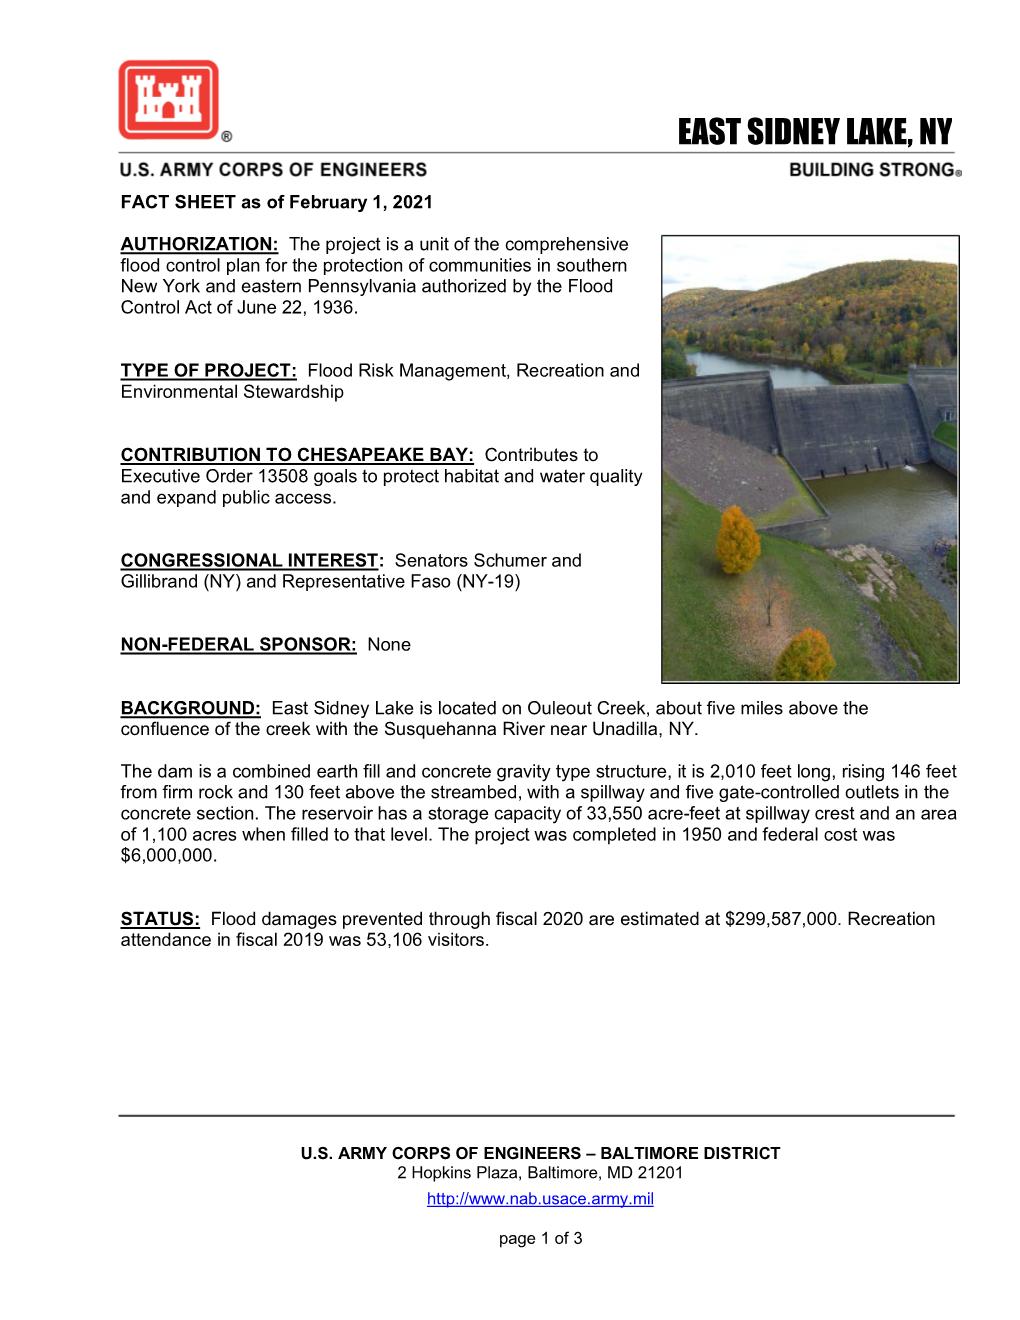 East Sidney Lake 2021 Fact Sheet